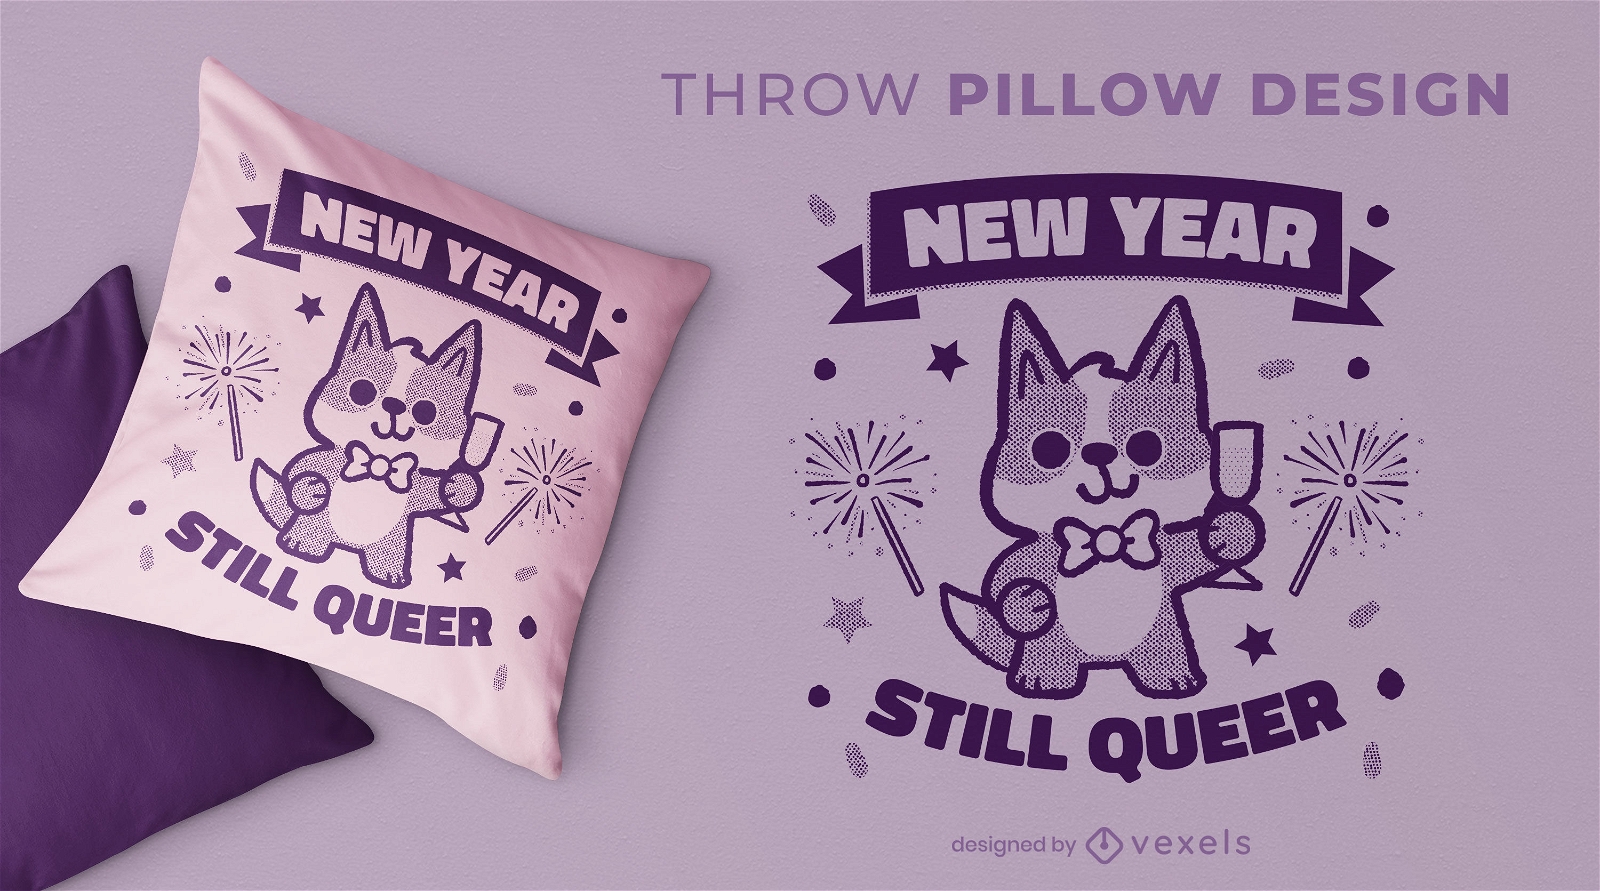 New Year still queer throw pillow design